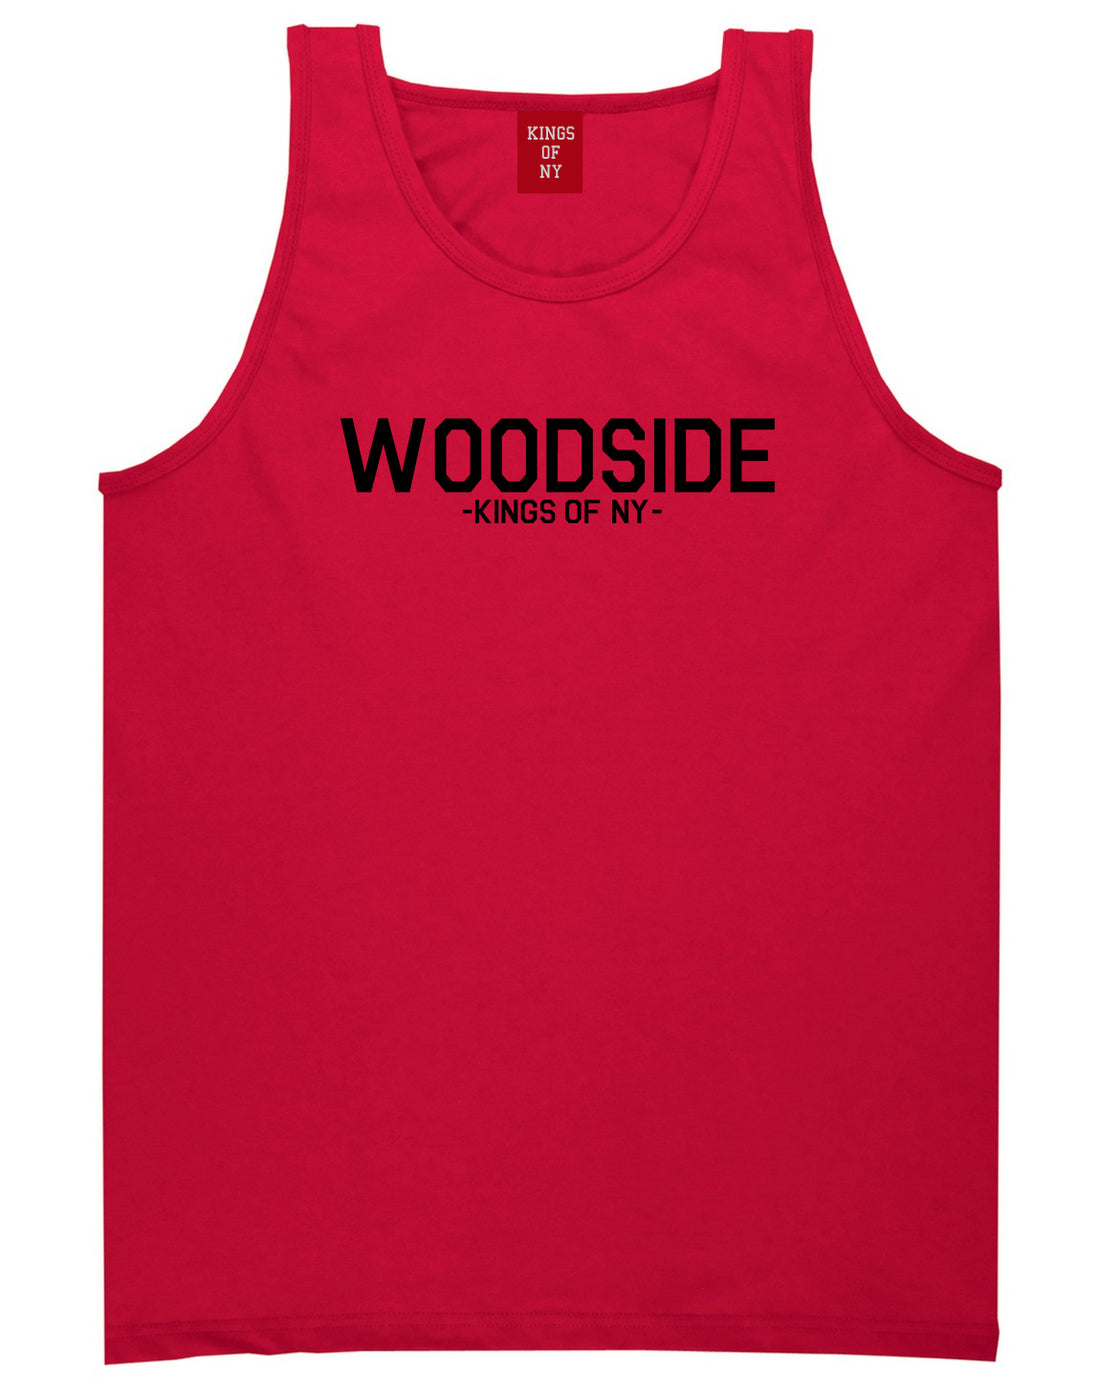 Woodside Queens New York Mens Tank Top Shirt Red